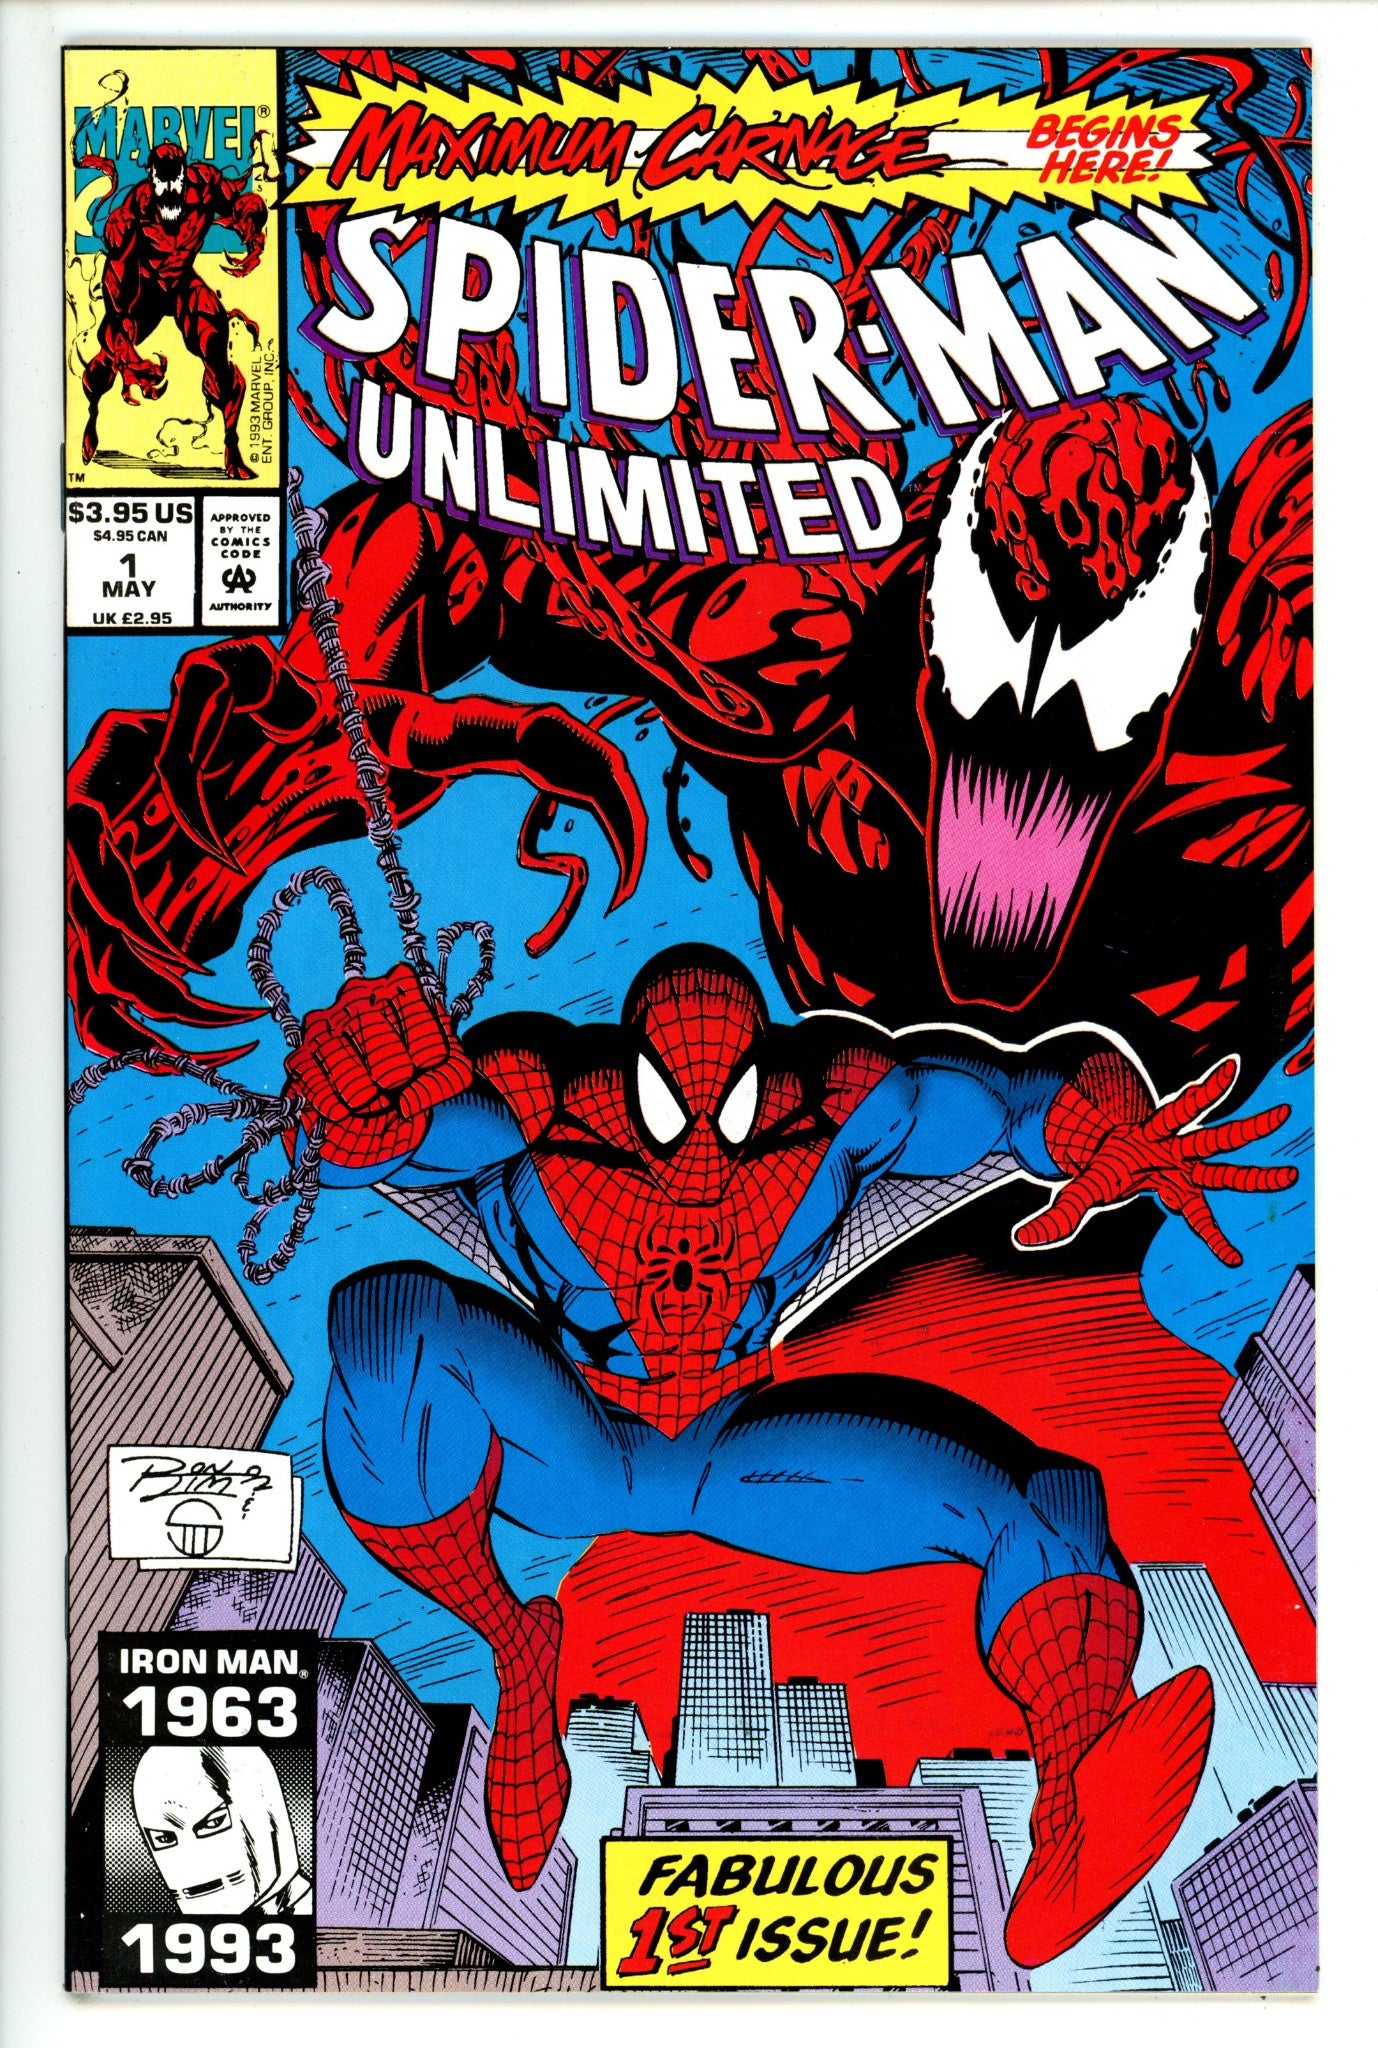 Spider-Man Unlimited Vol 1 1 NM (9.4) (1993)